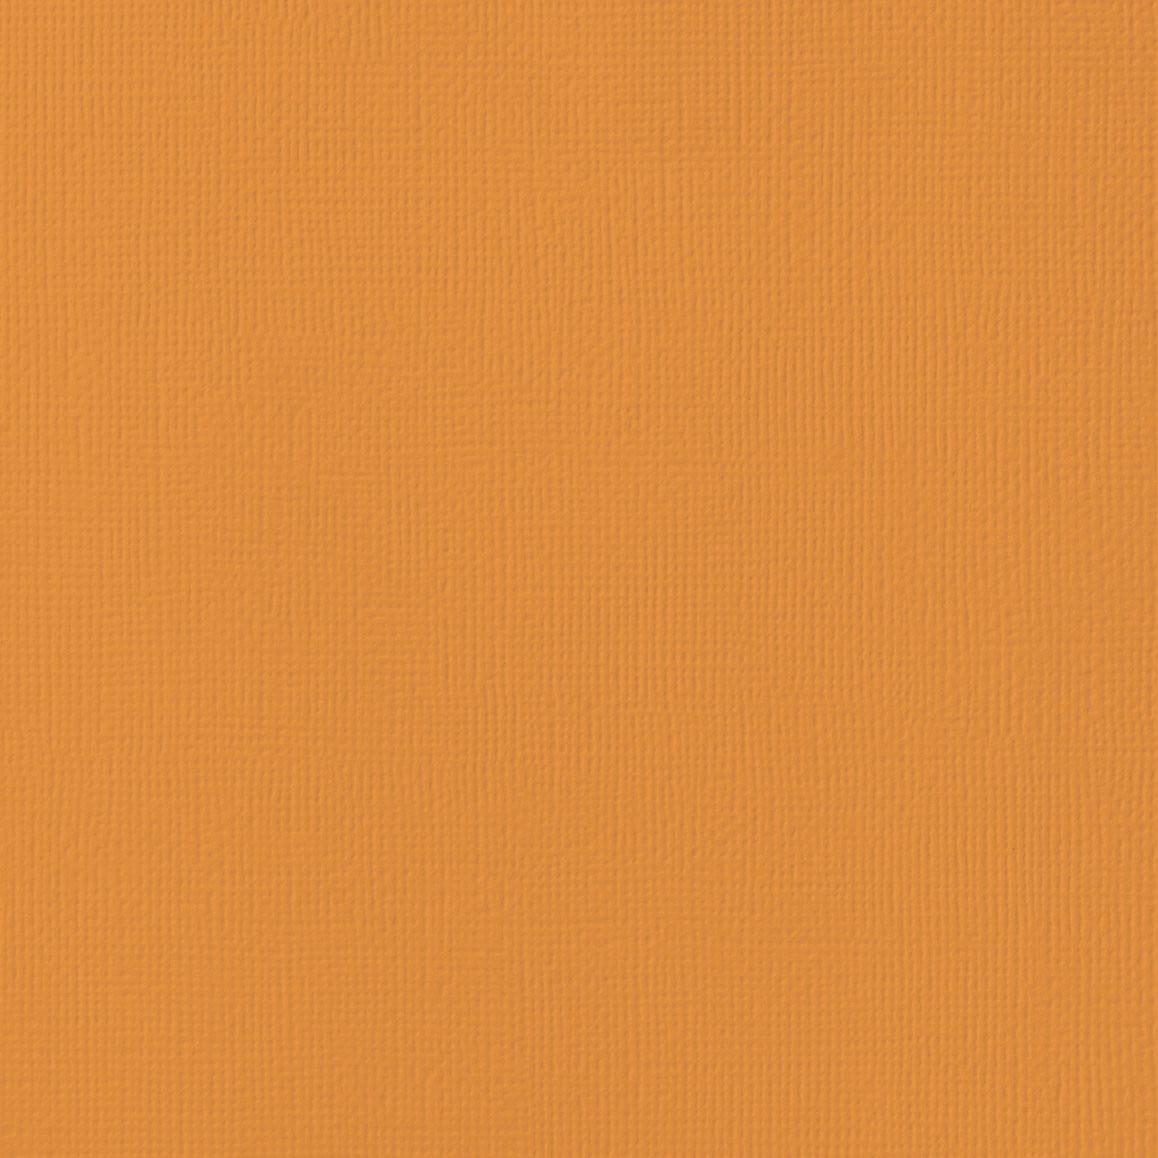 BUTTERSCOTCH orange cardstock -12x12 inch - 80 lb - textured scrapbook paper - American Crafts